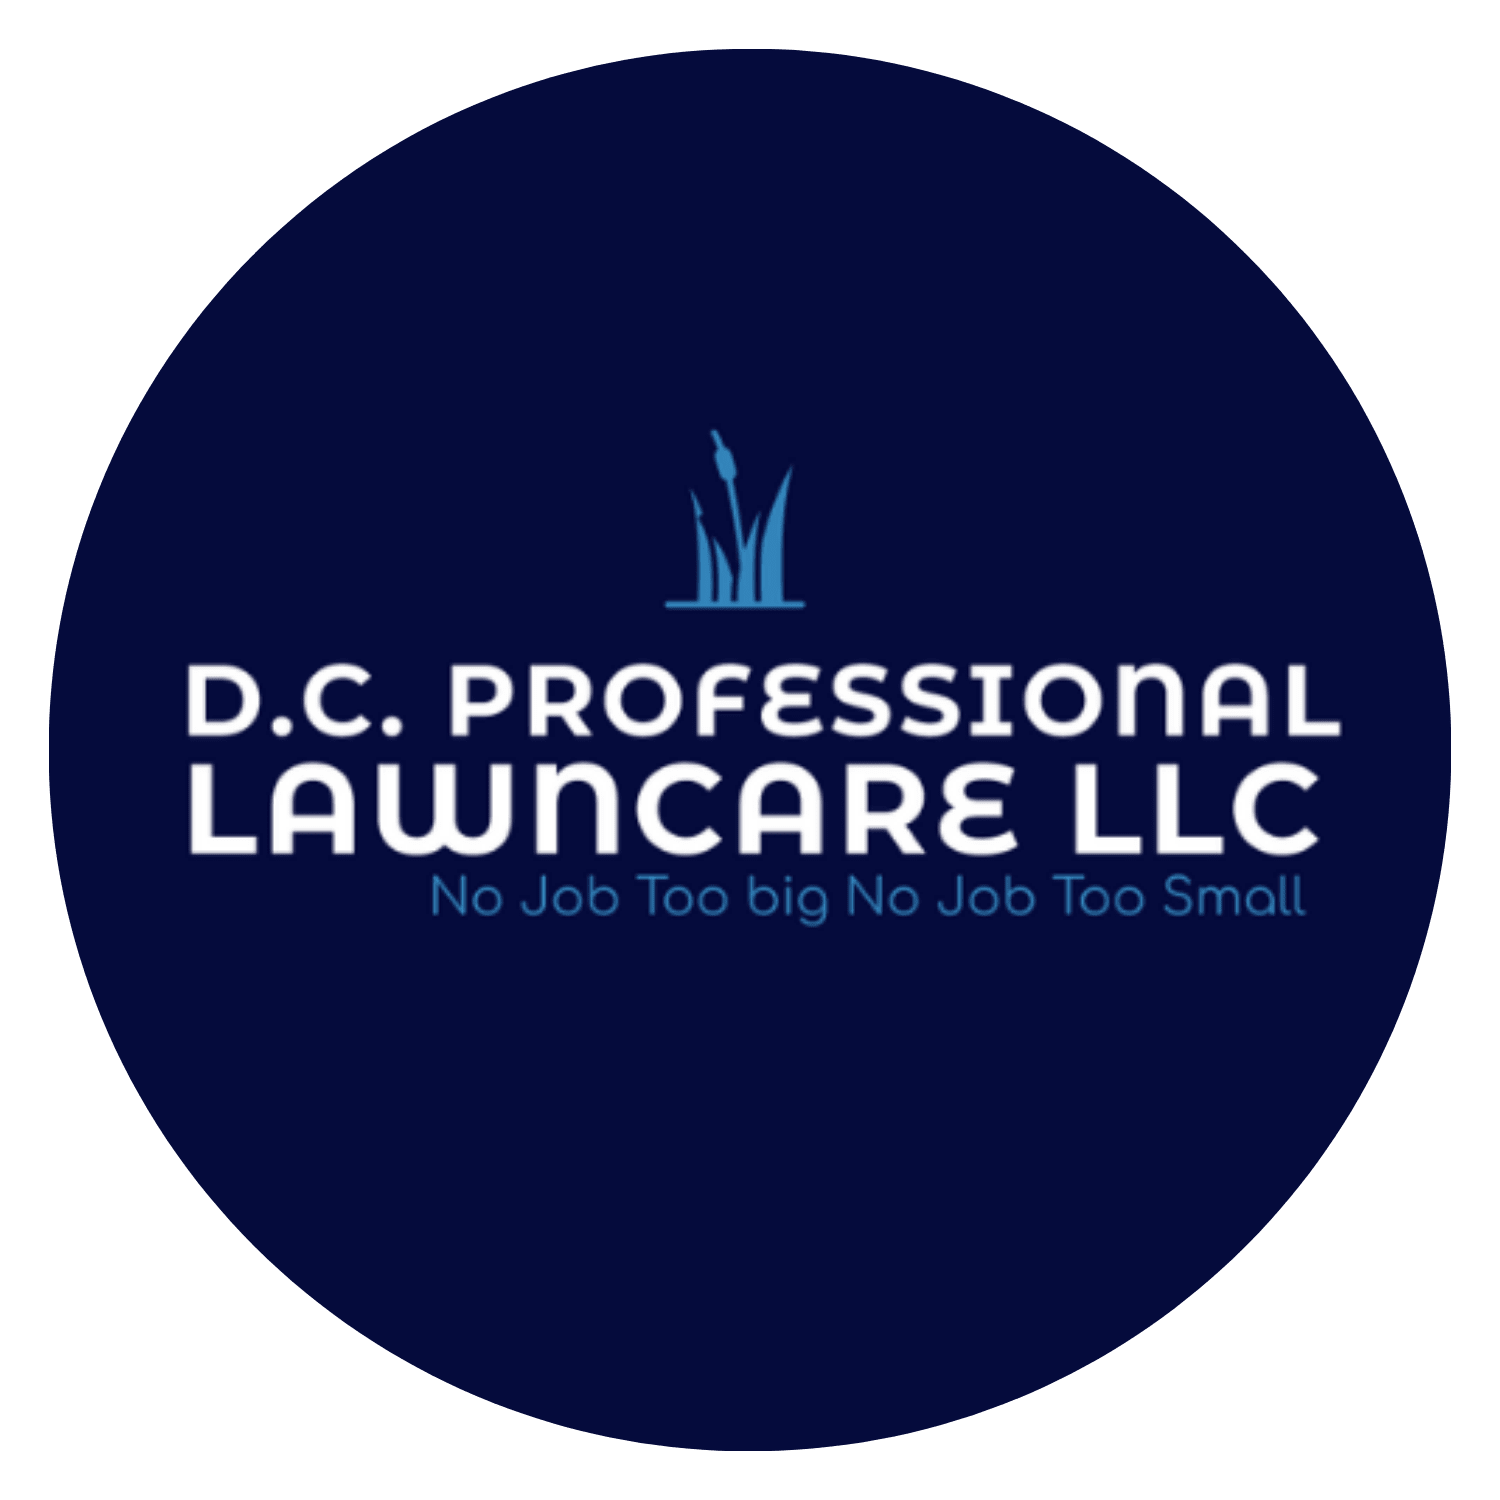 D.C. Professional Lawn Care LLC